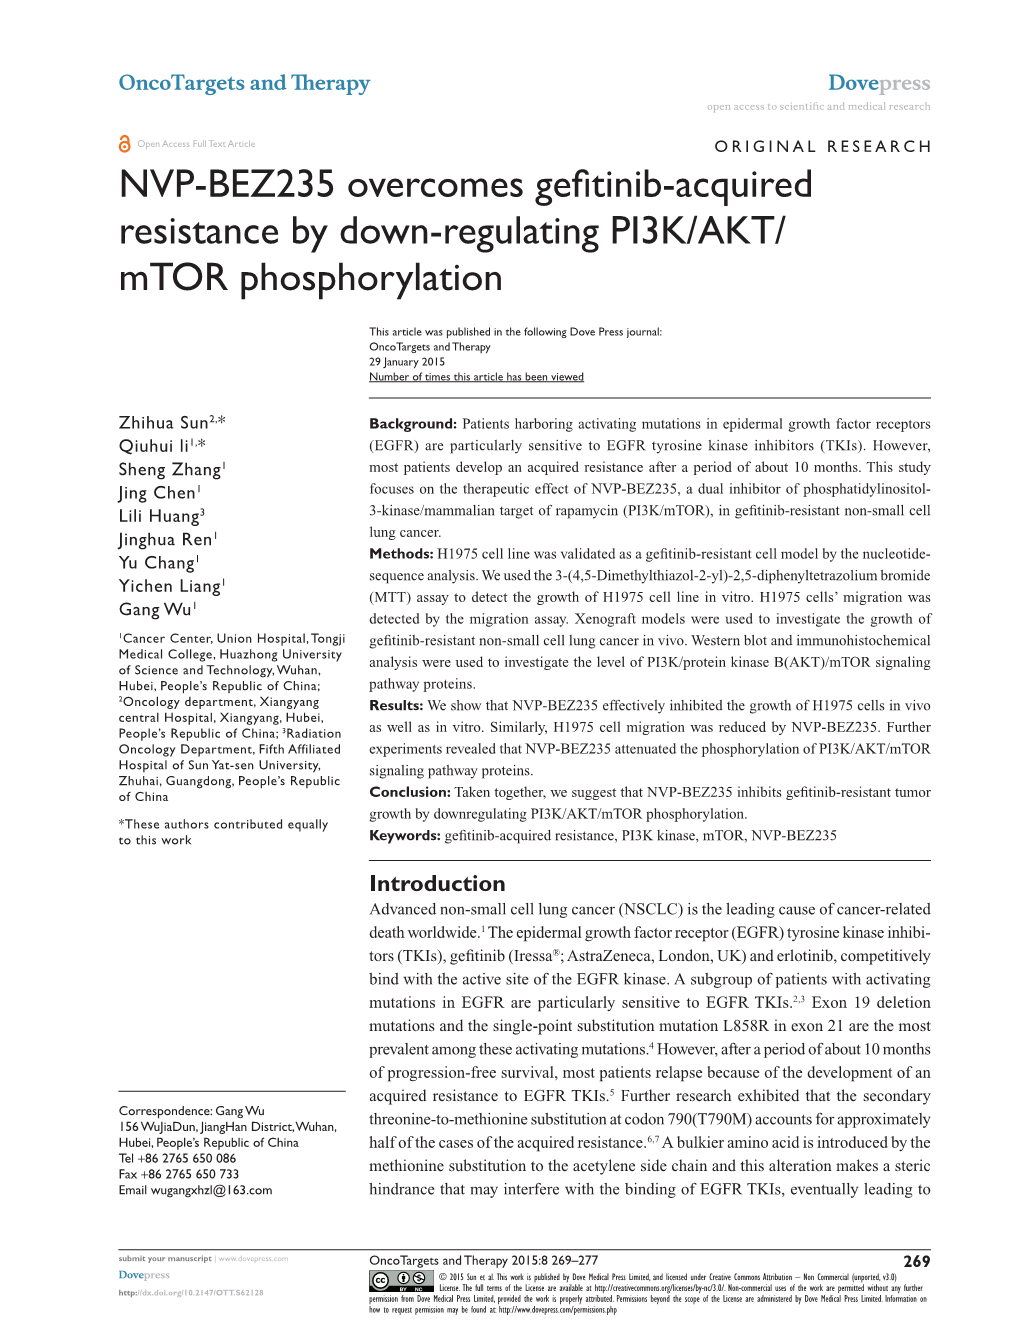 NVP-BEZ235 Overcomes Gefitinib-Acquired Resistance by Down-Regulating PI3K/AKT/ Mtor Phosphorylation